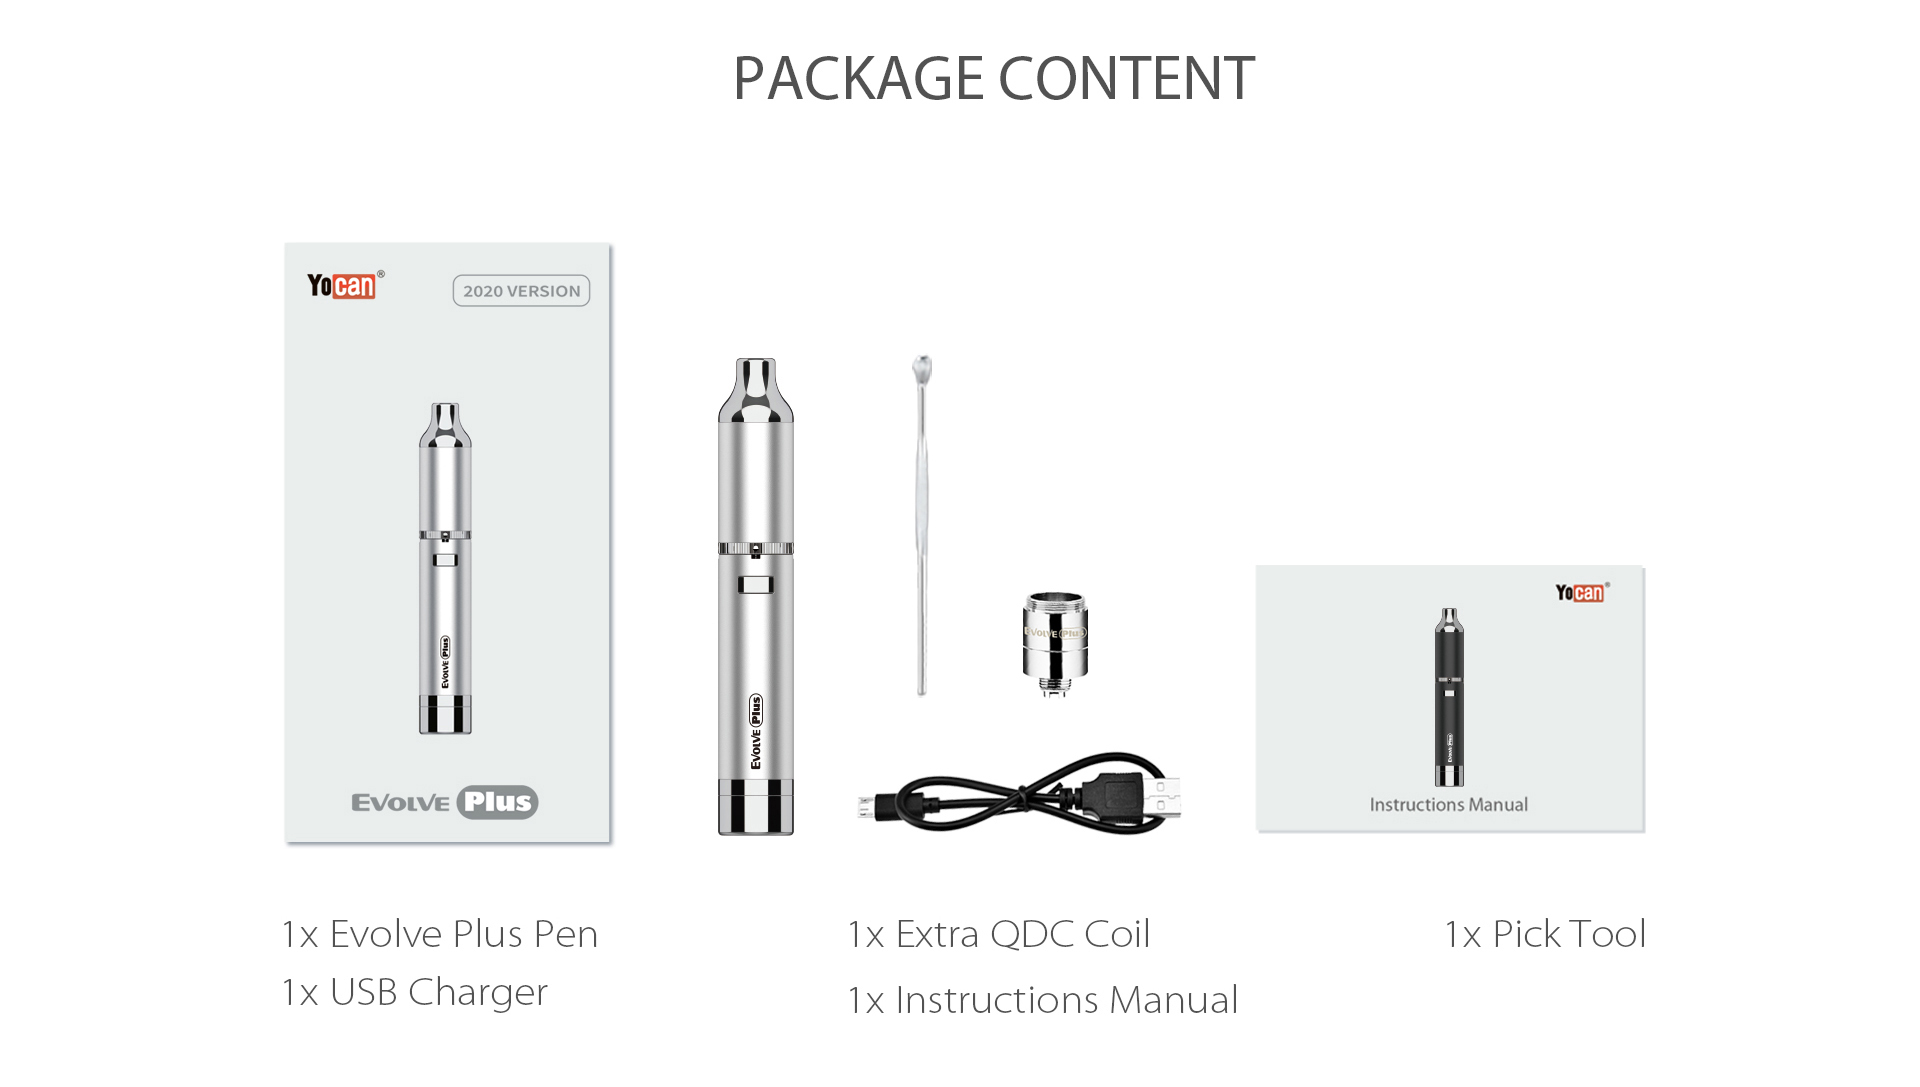 Yocan Evolve Plus XL Vaporizer 2020 version package content.